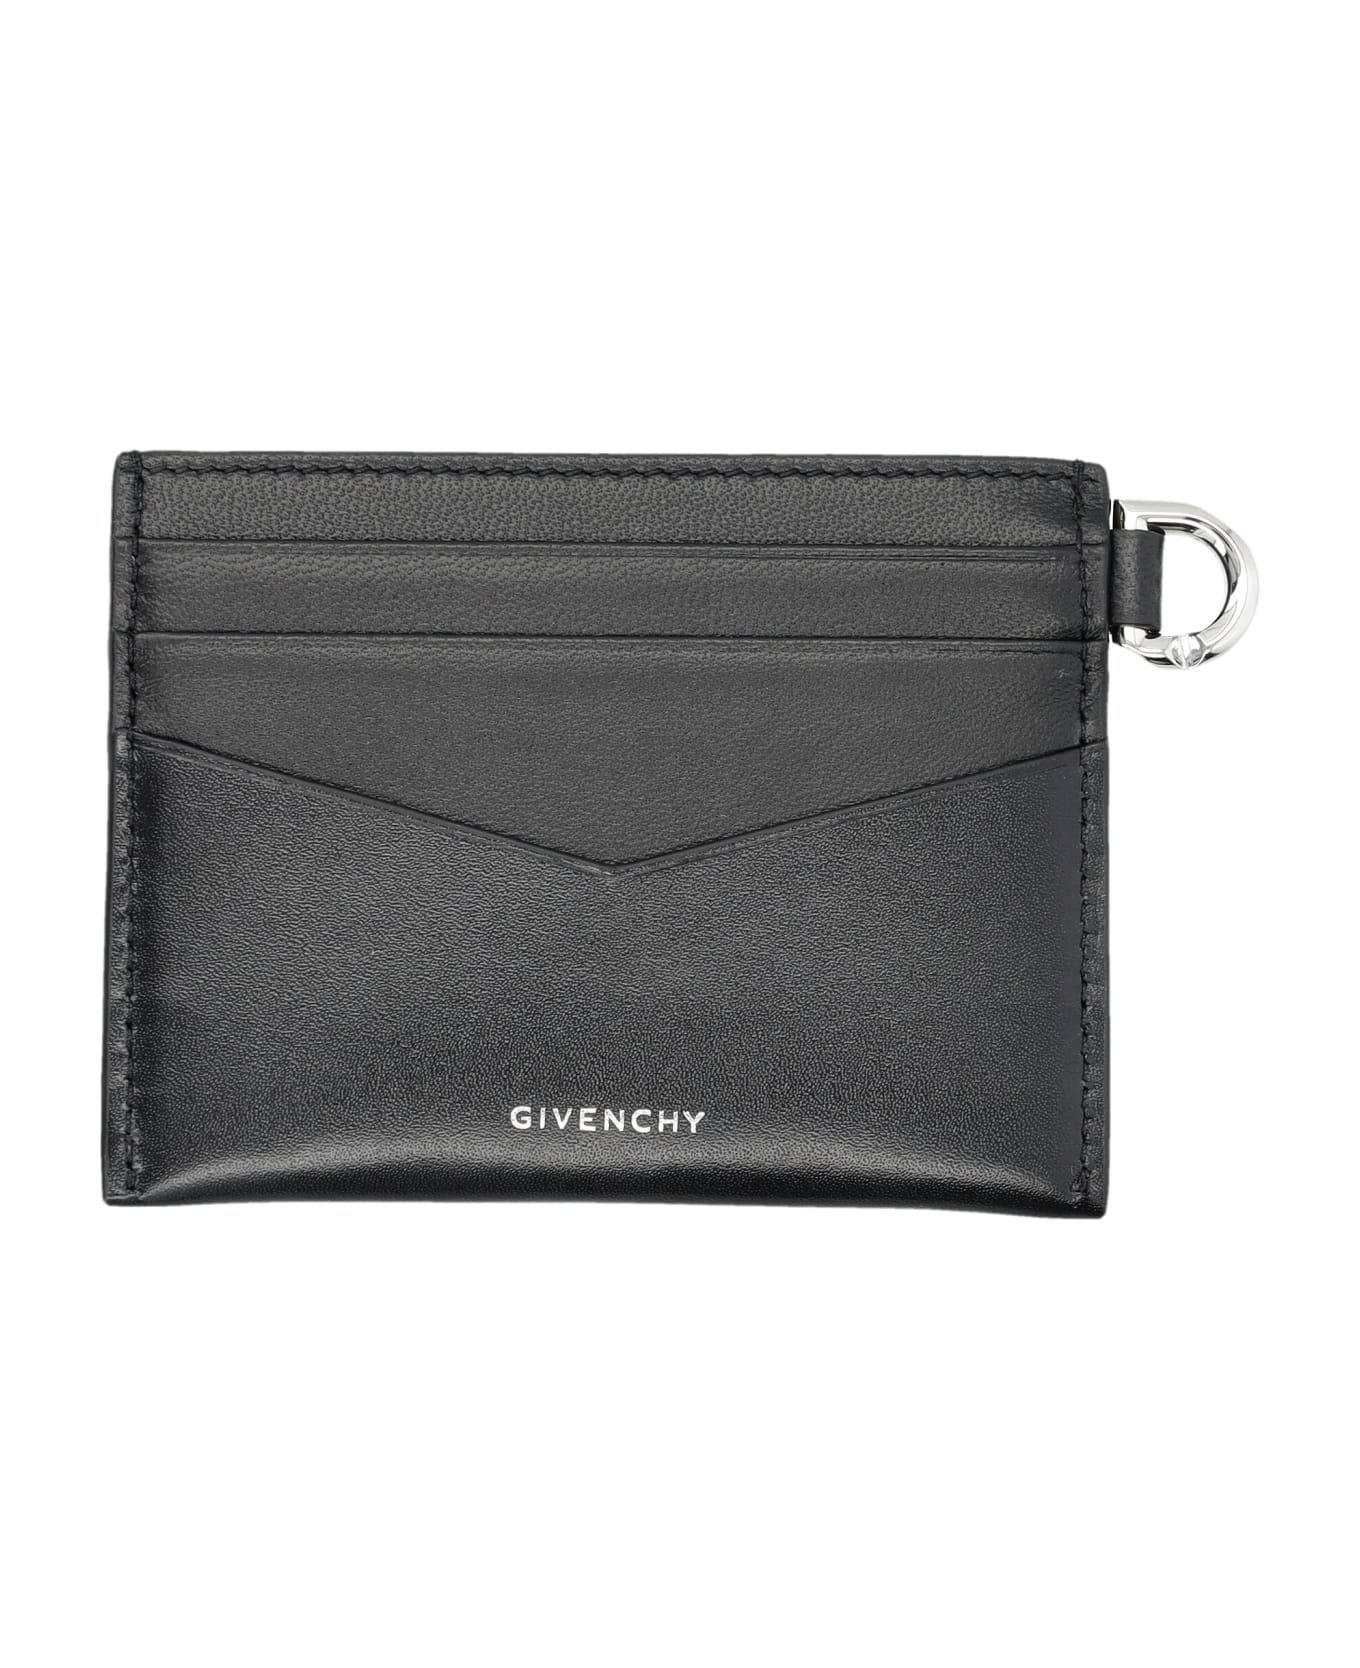 Givenchy 4g- 2x3 Cc Cardholder - BLACK